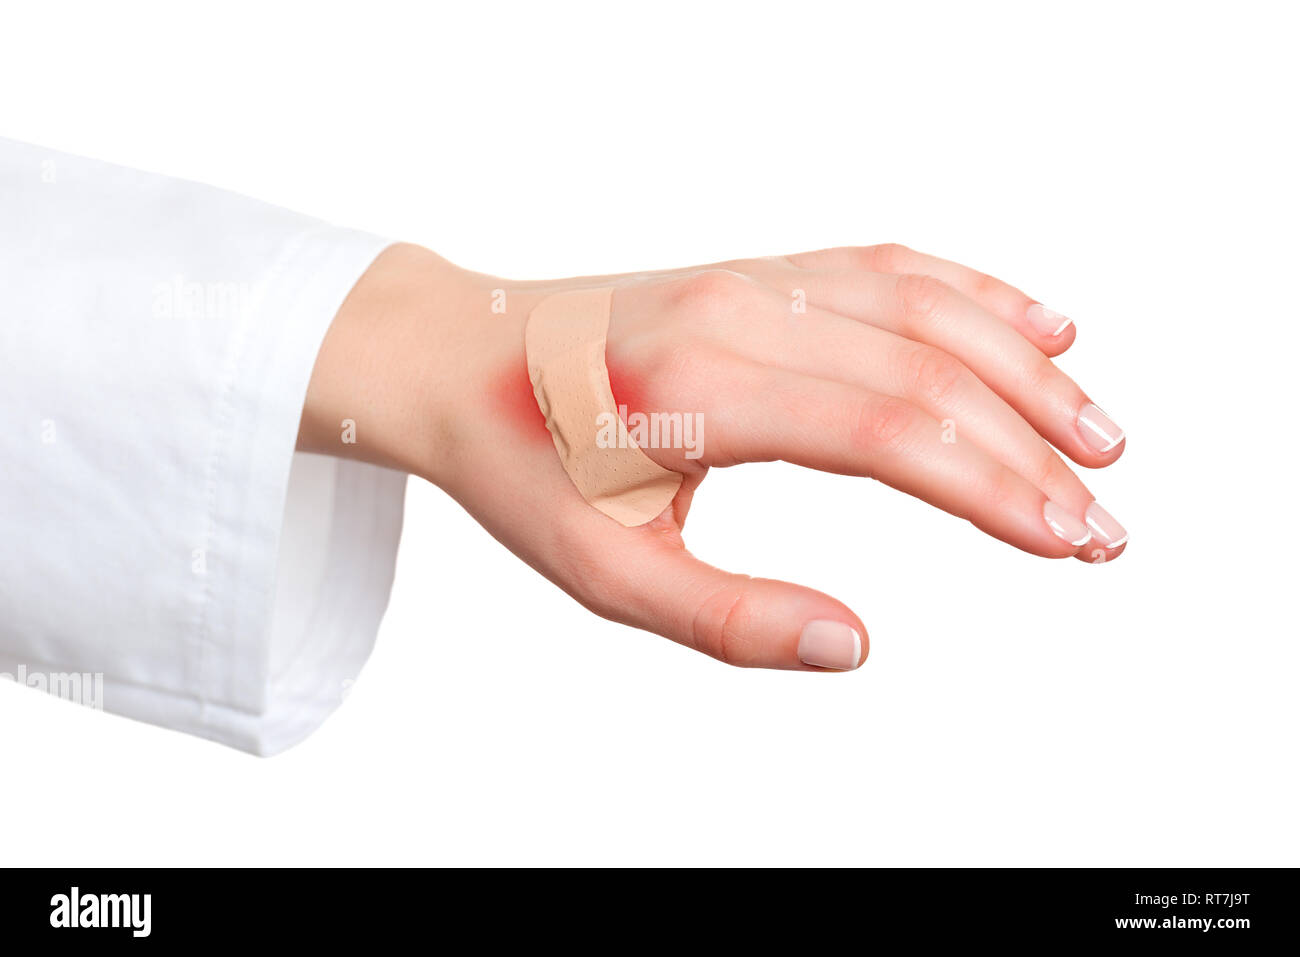 Pflaster Bandage auf verletzte Haut Stockfotografie - Alamy